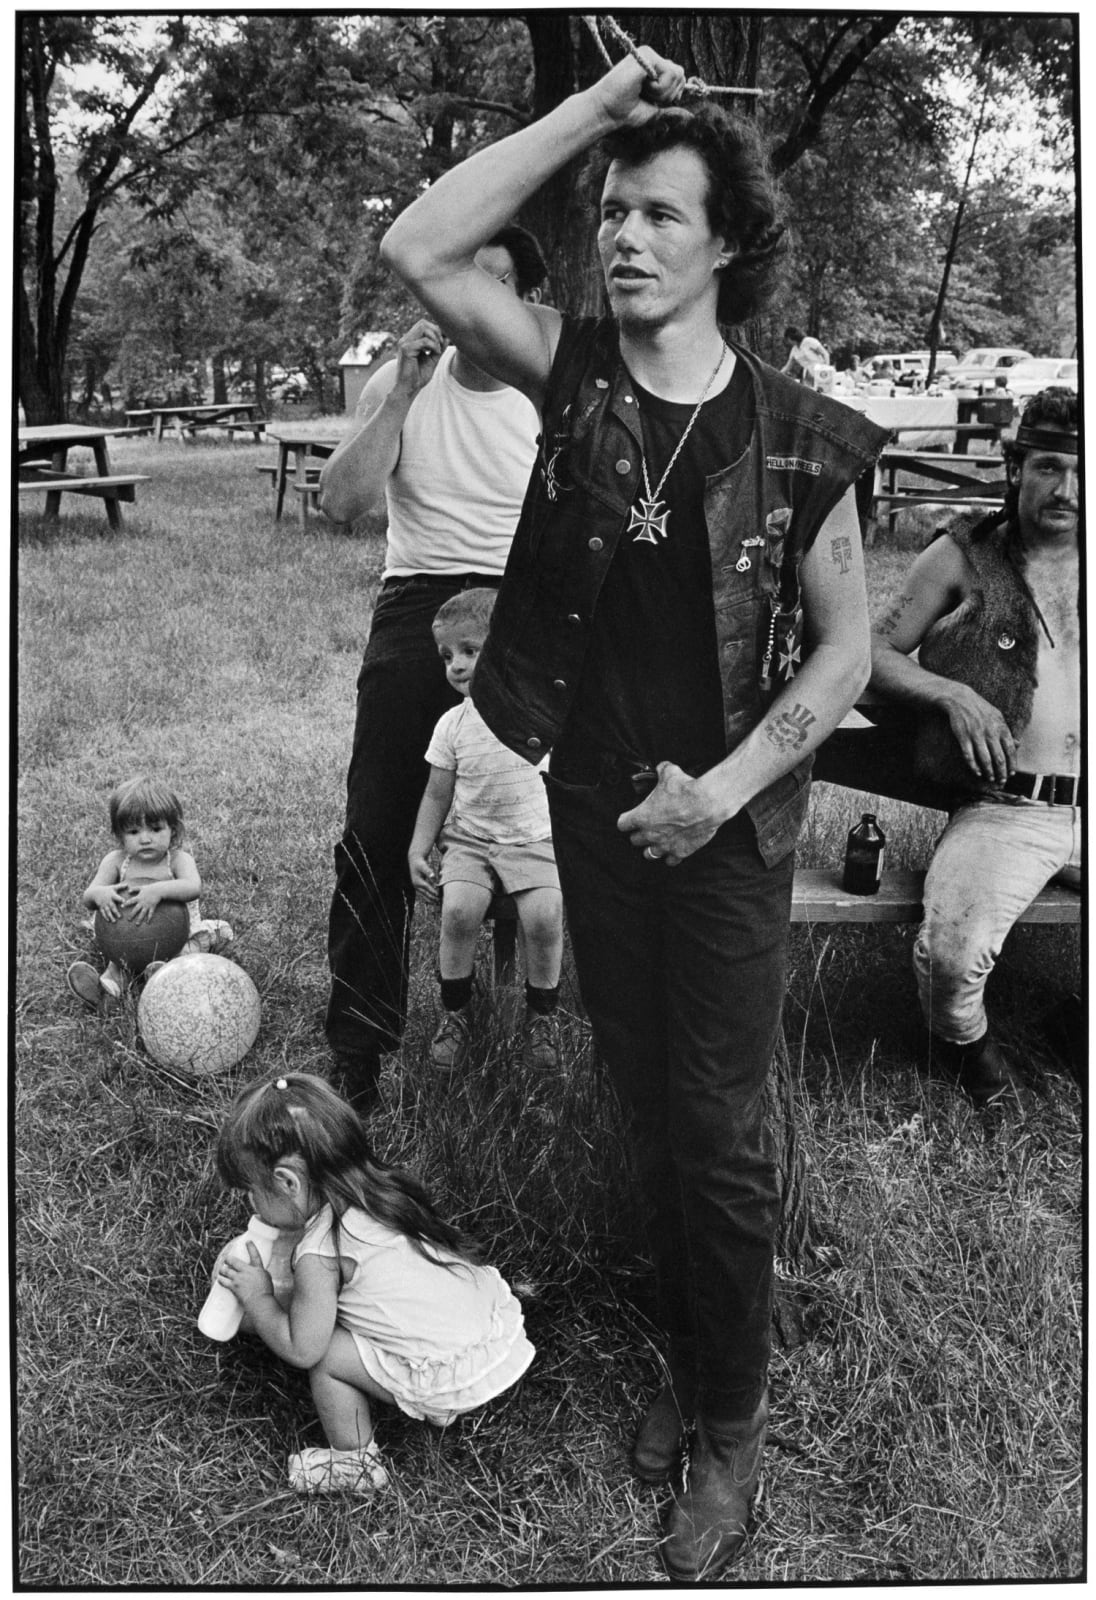 Danny Lyon, Cowboy at Rouges' picnic, South Chicago, 1966